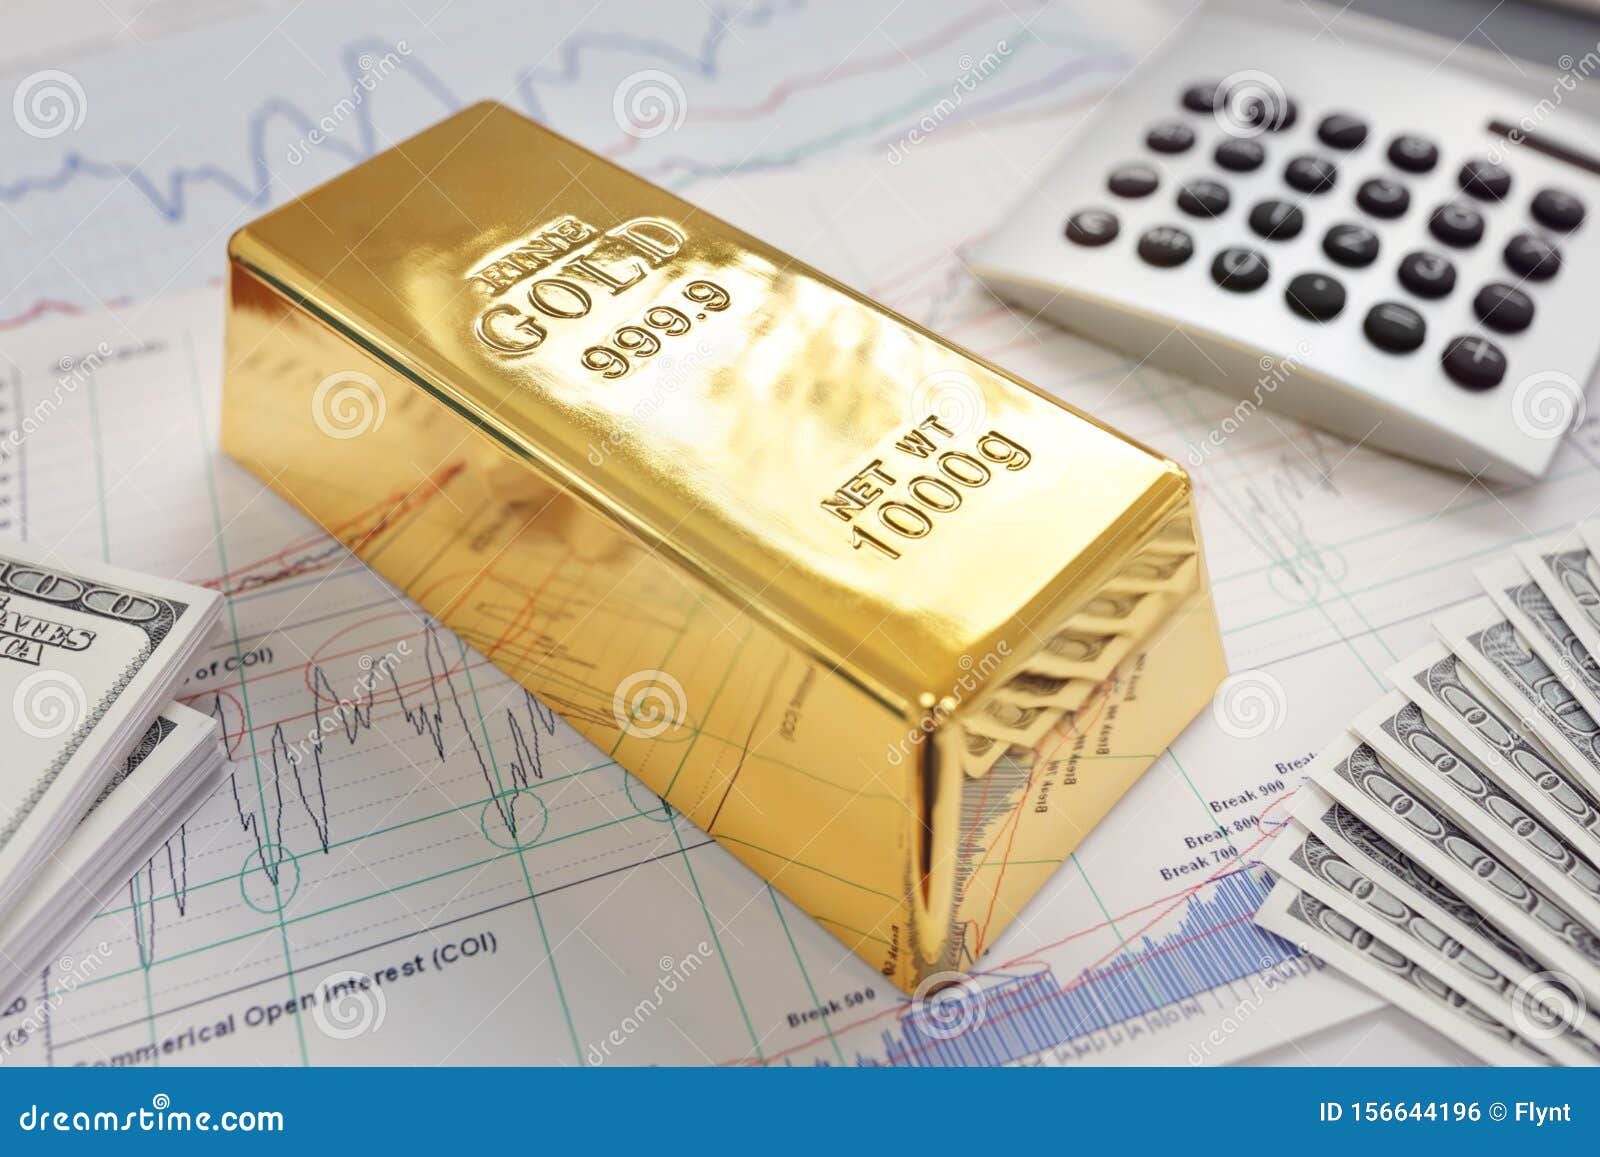 gold bullion bar on a stocks and shares chart